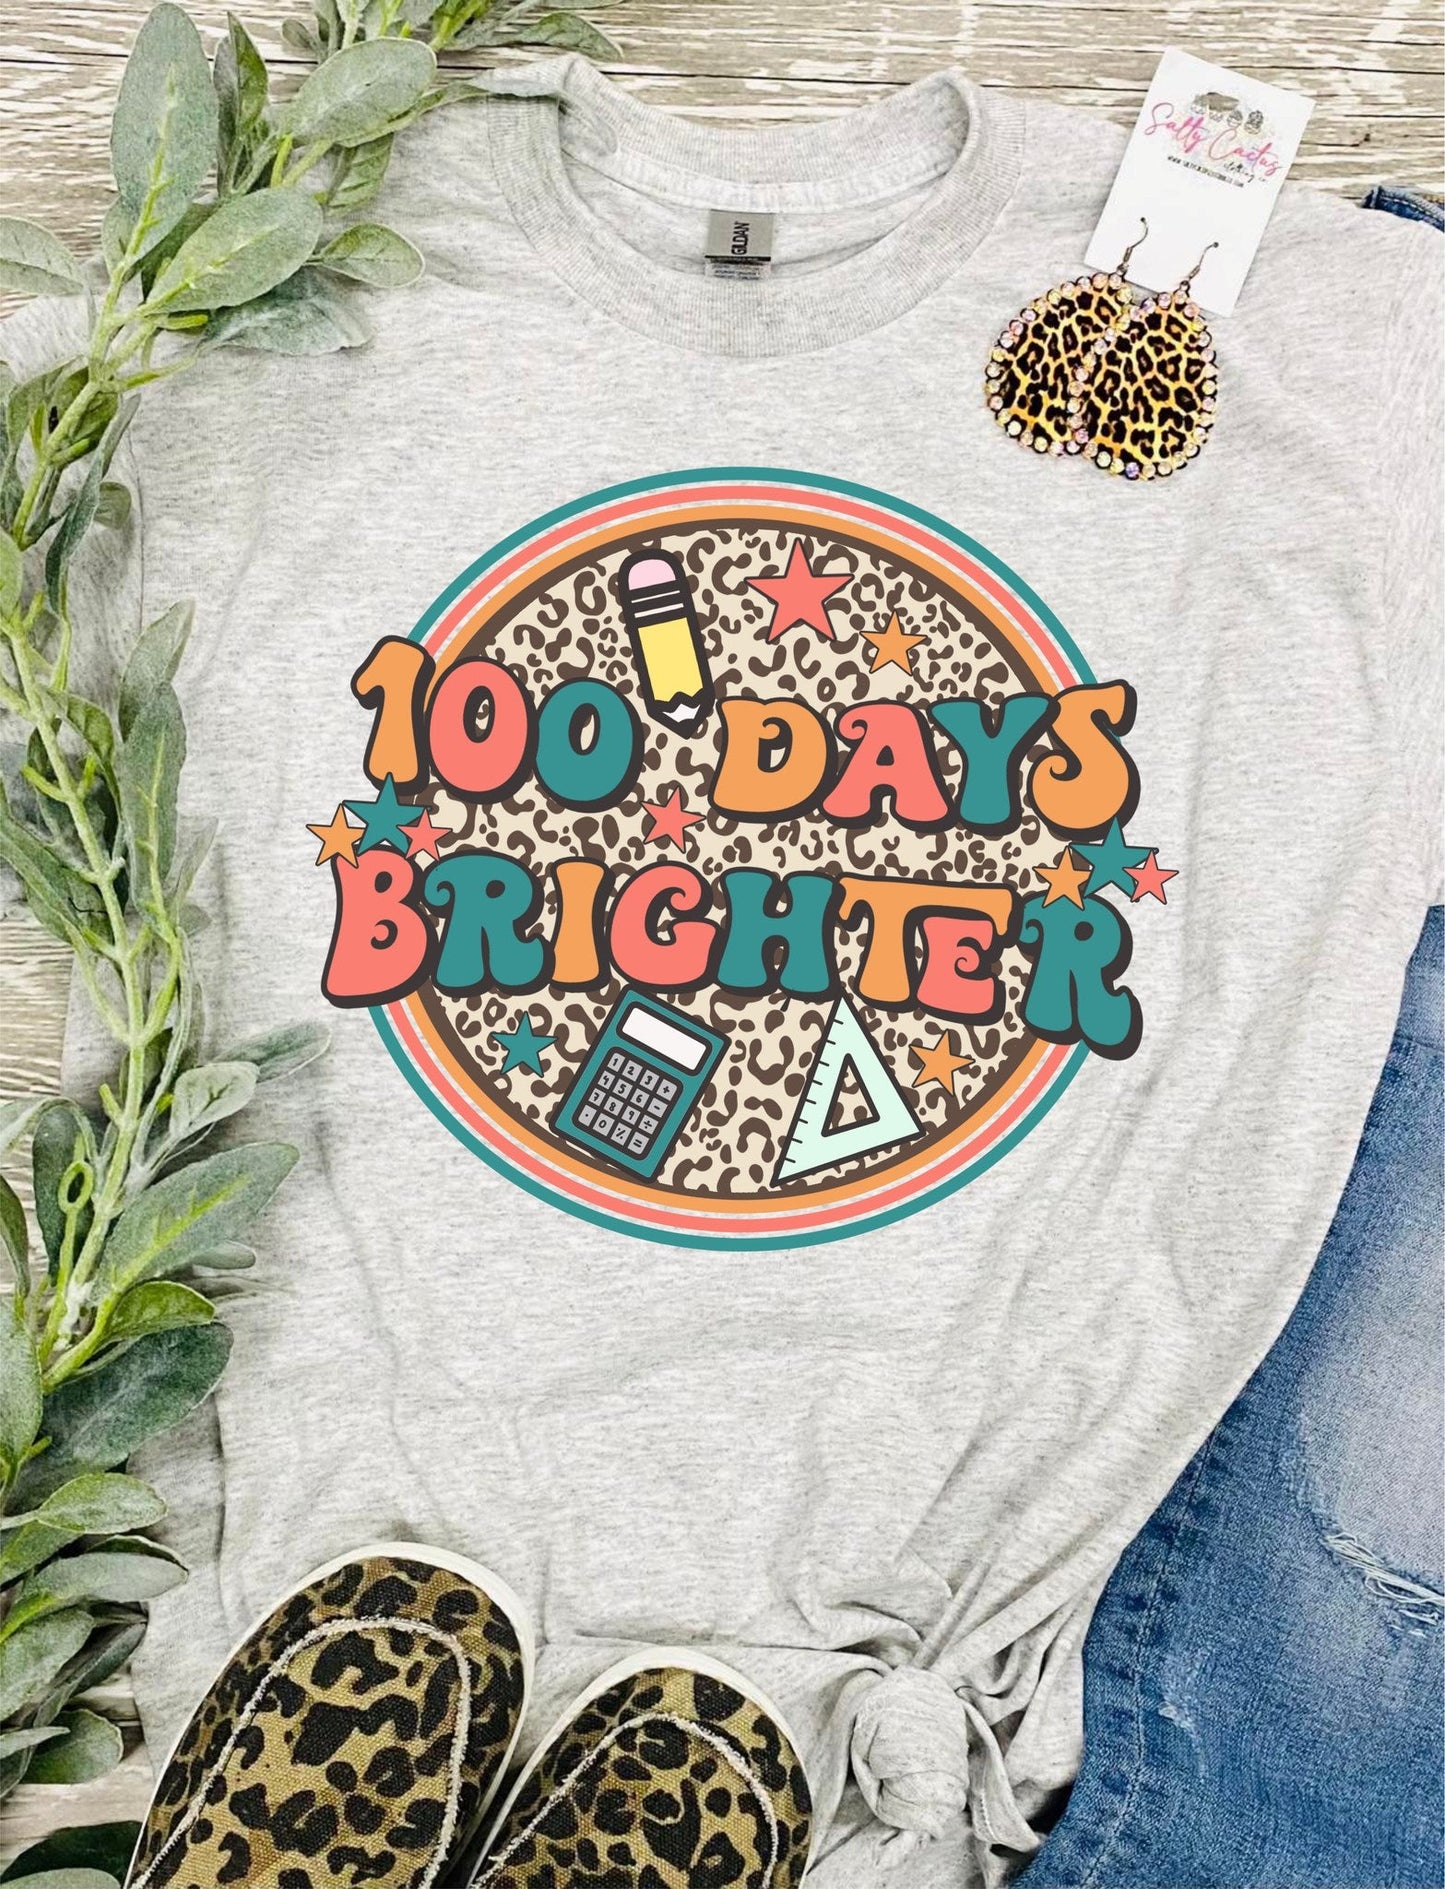 100 Days Brighter Leopard Circle Ash Grey Tee